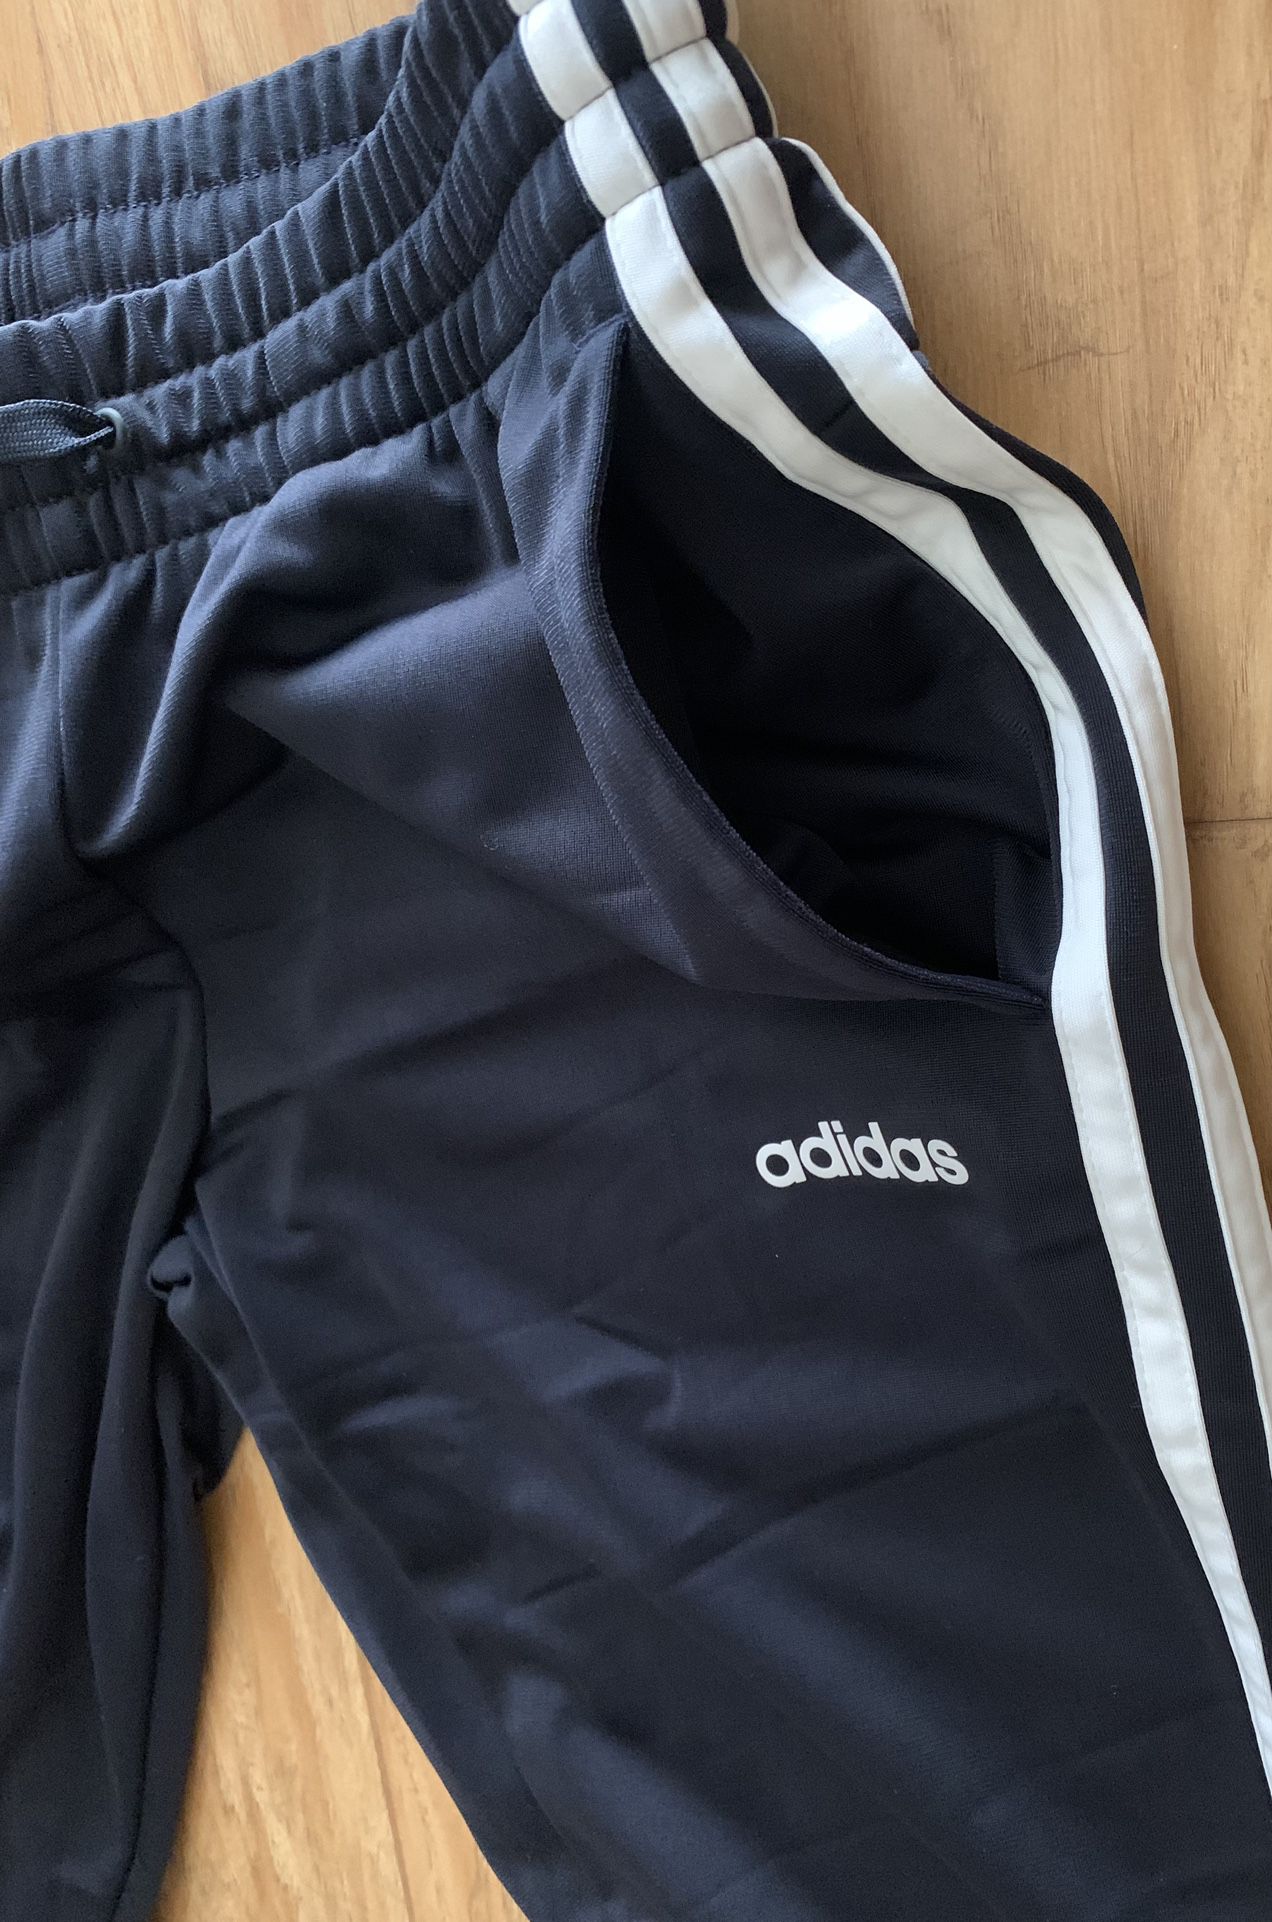 [New] Adidas 3 Stripe Women’s Track Pants